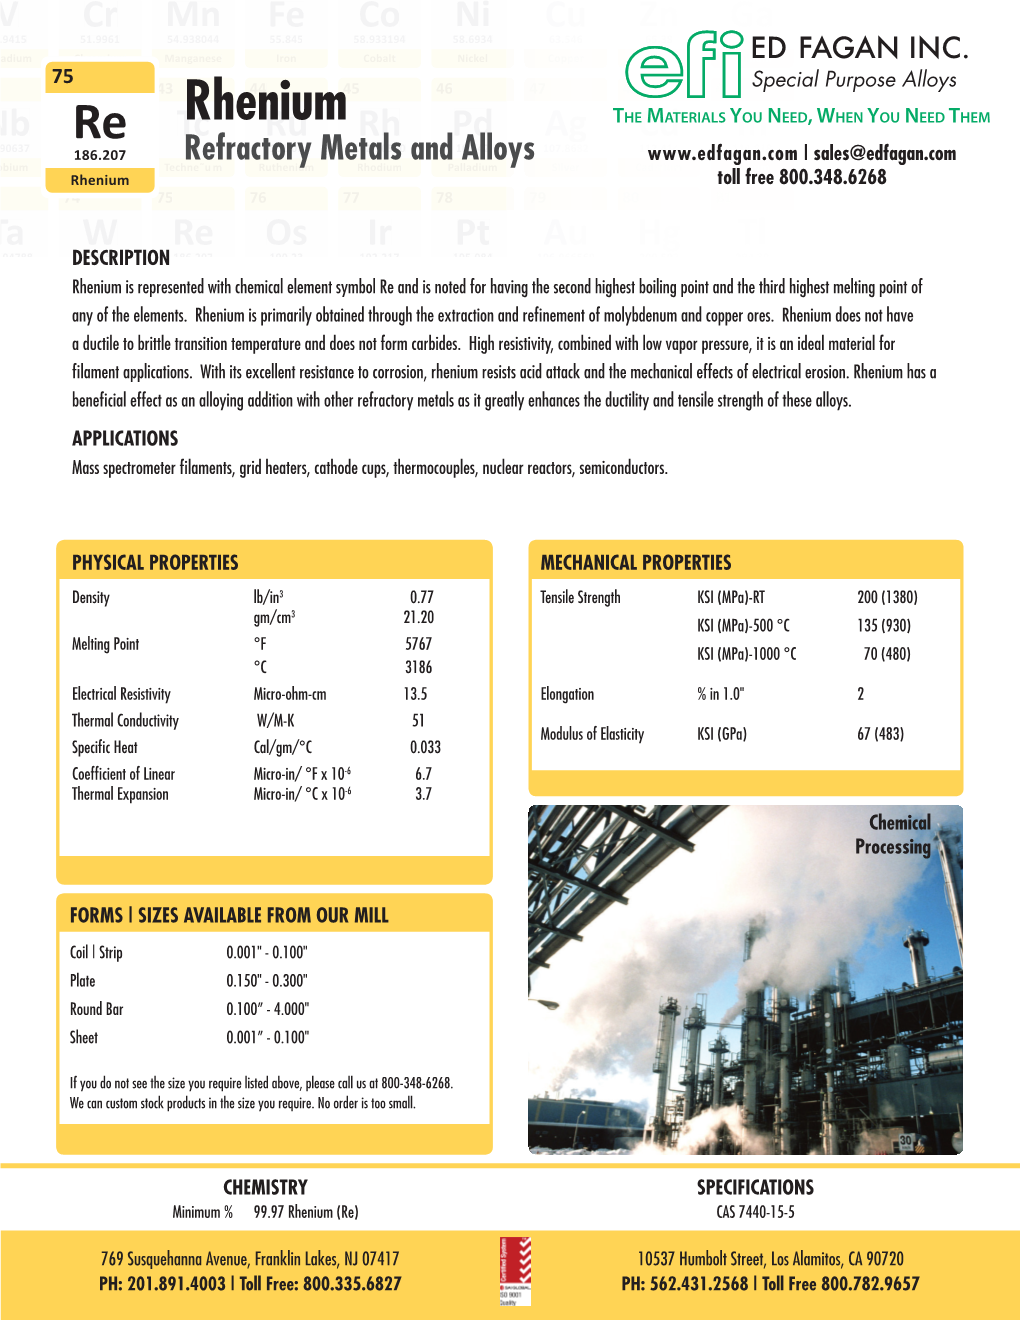 Ed Fagan Inc. Rhenium Refractory Metal Data Sheet